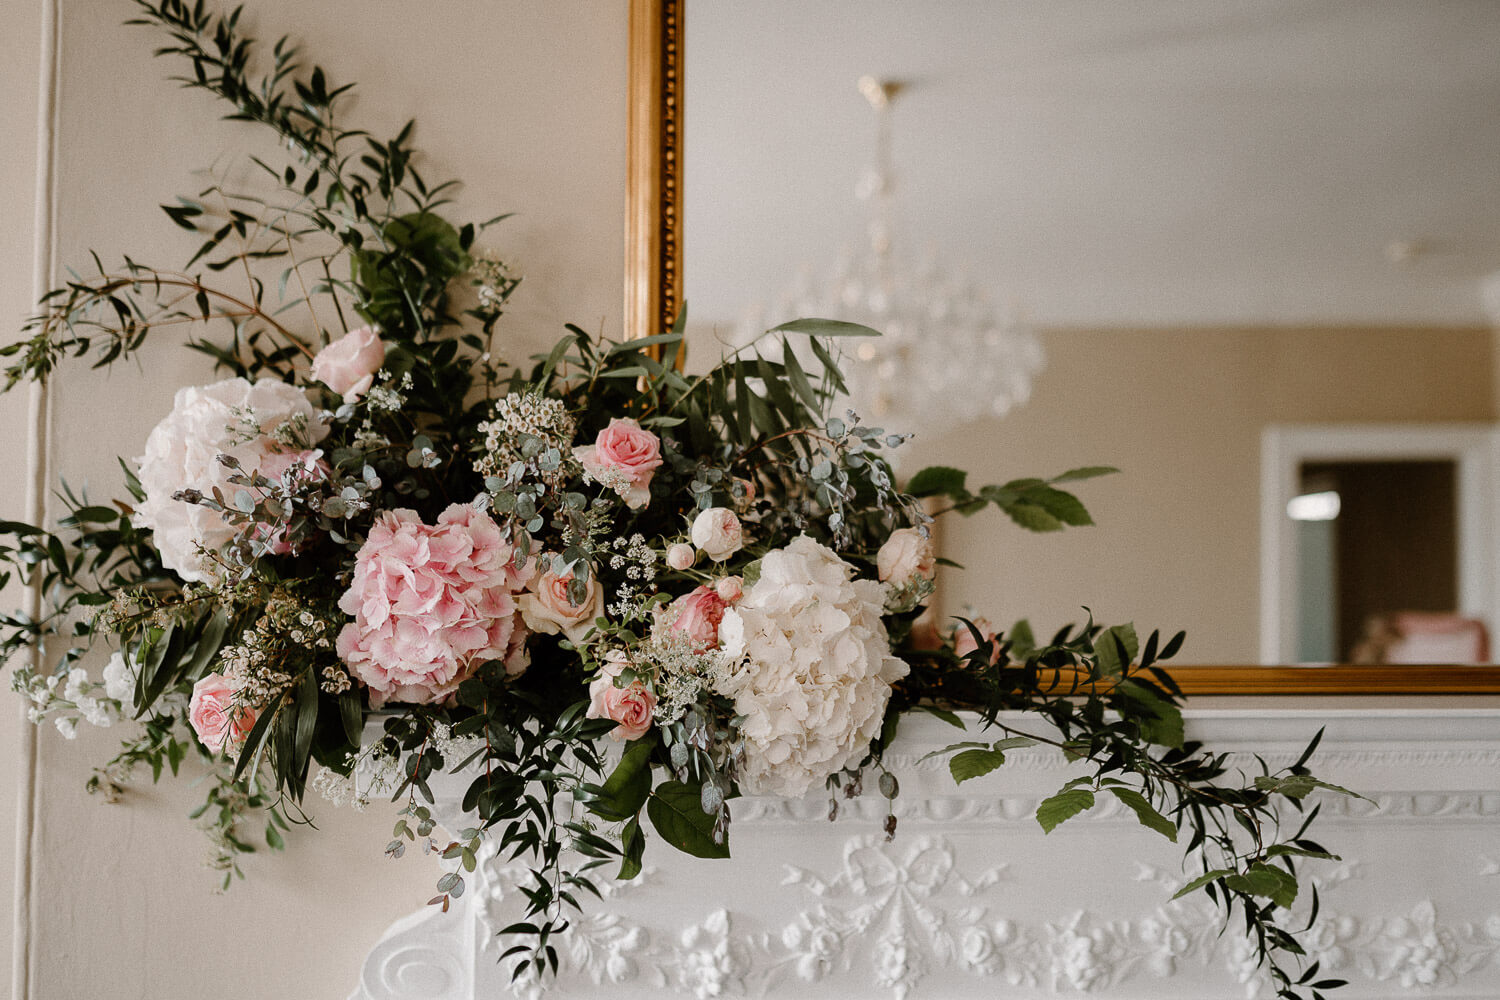 Stunning mantel floral arrangement at Kingston Estate country house.